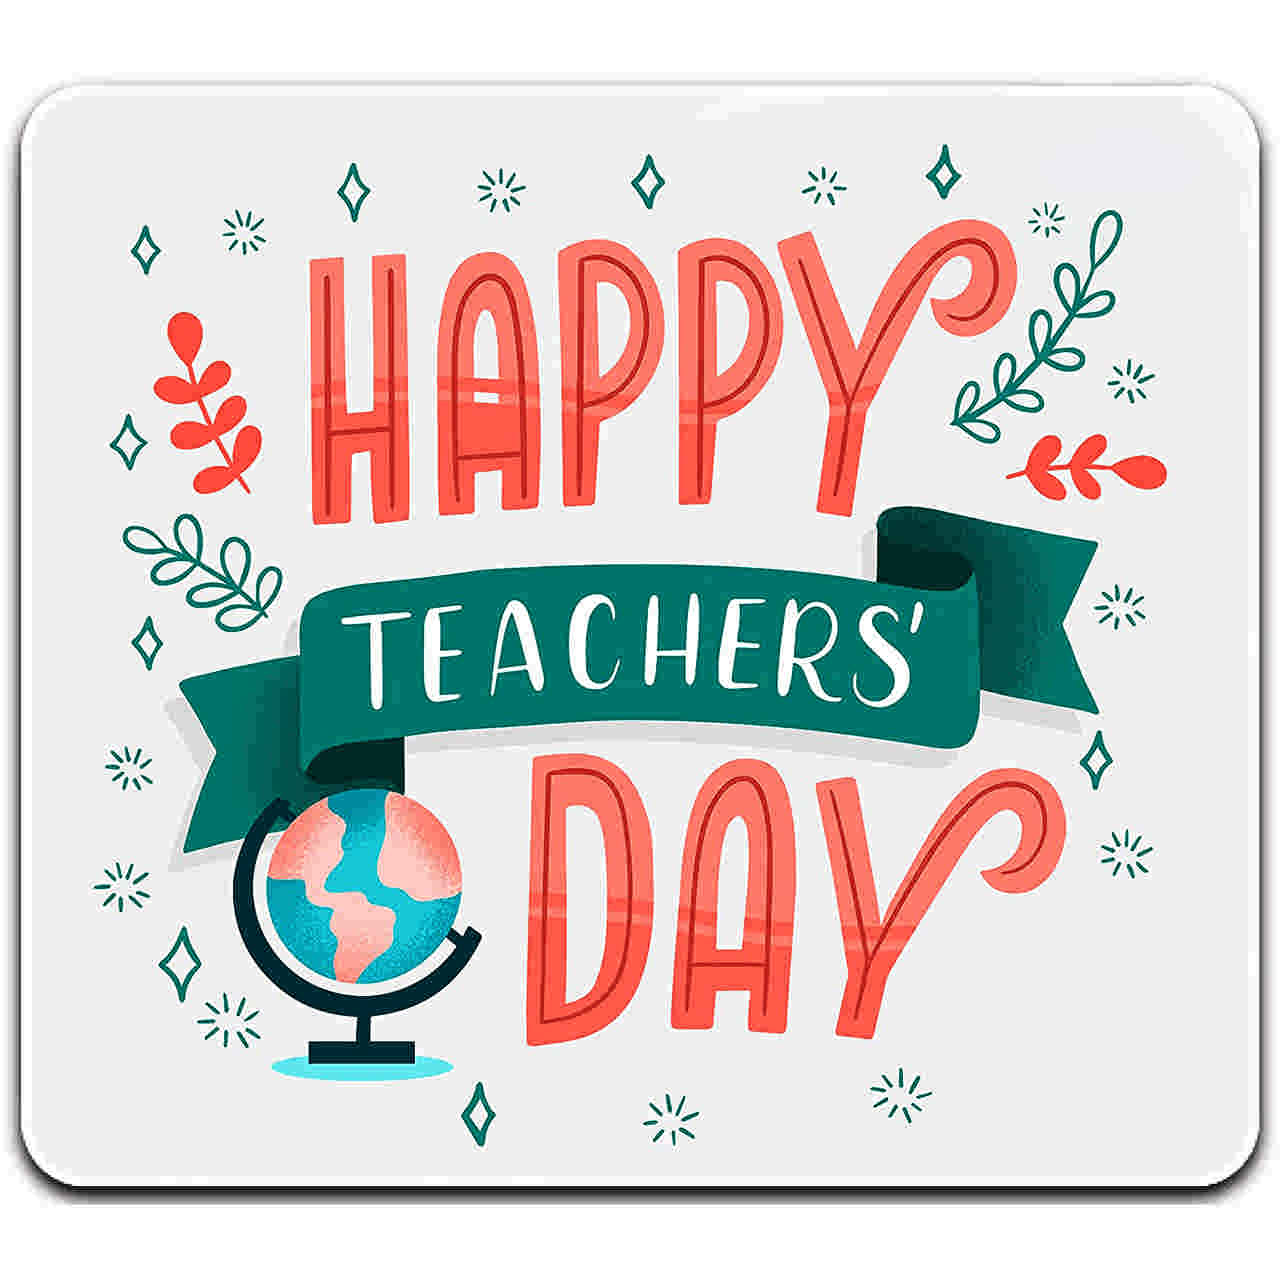 Mousepad Gifts for Teachers Day World Teachers Day Teachers Day Gifts Teachers Appreciation